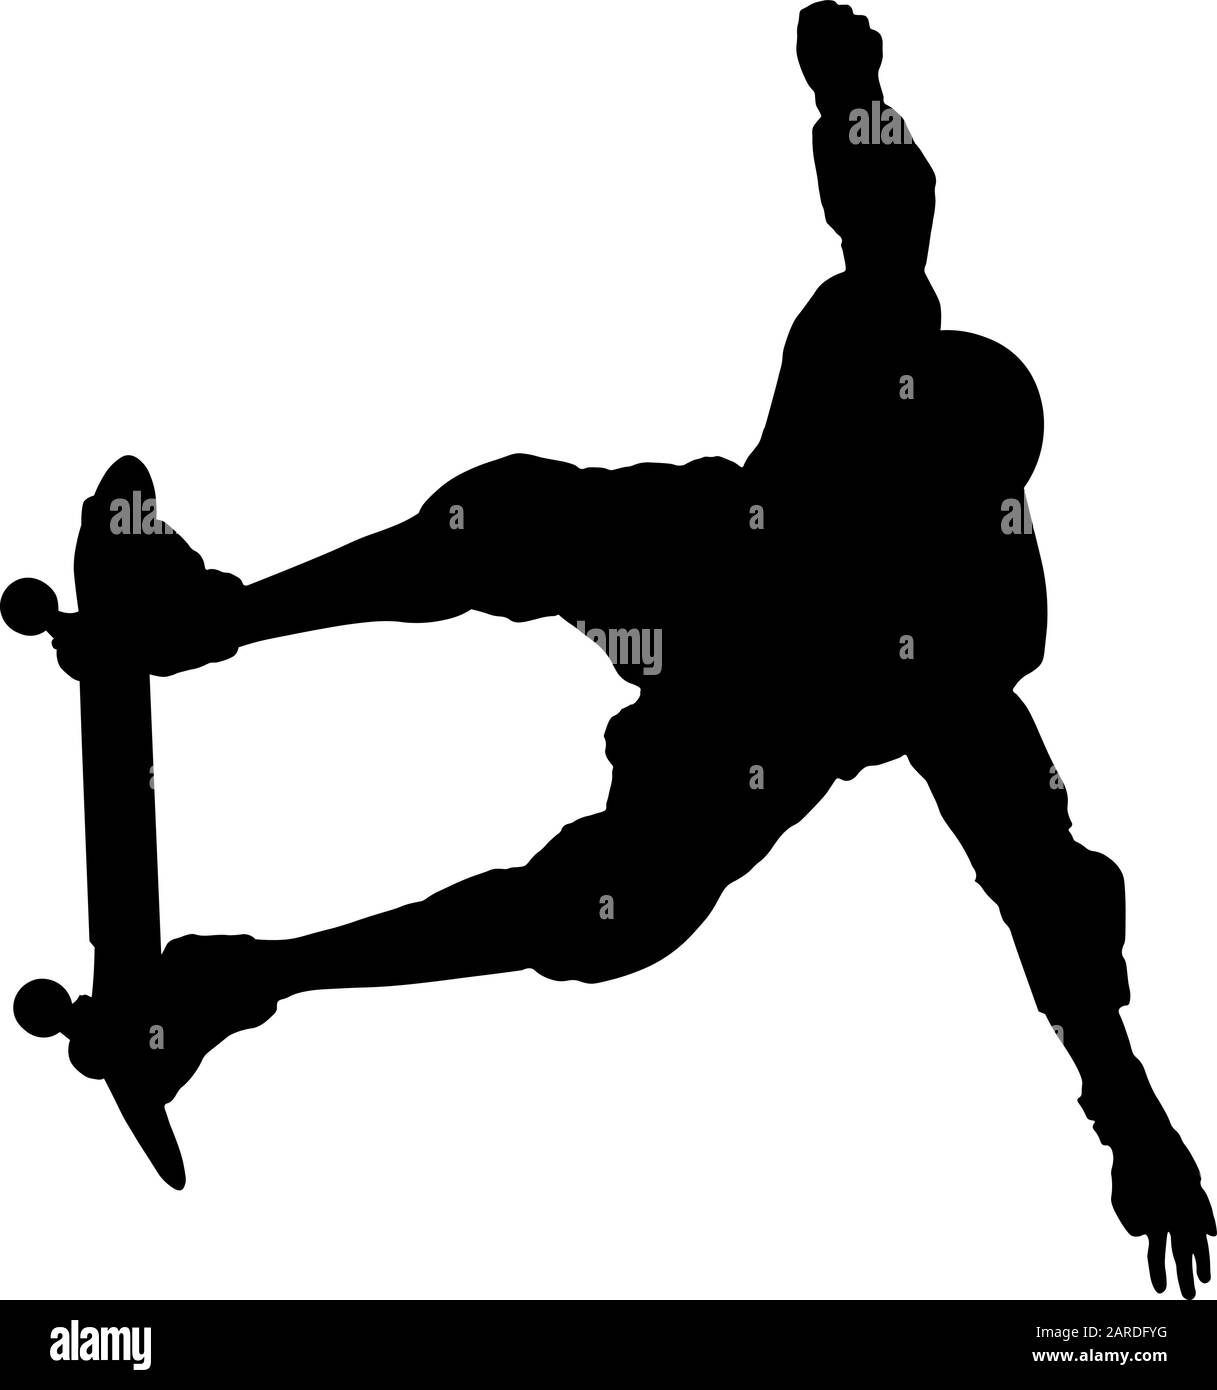 Skateboarder silhouette in black vector graphic Stock Vector